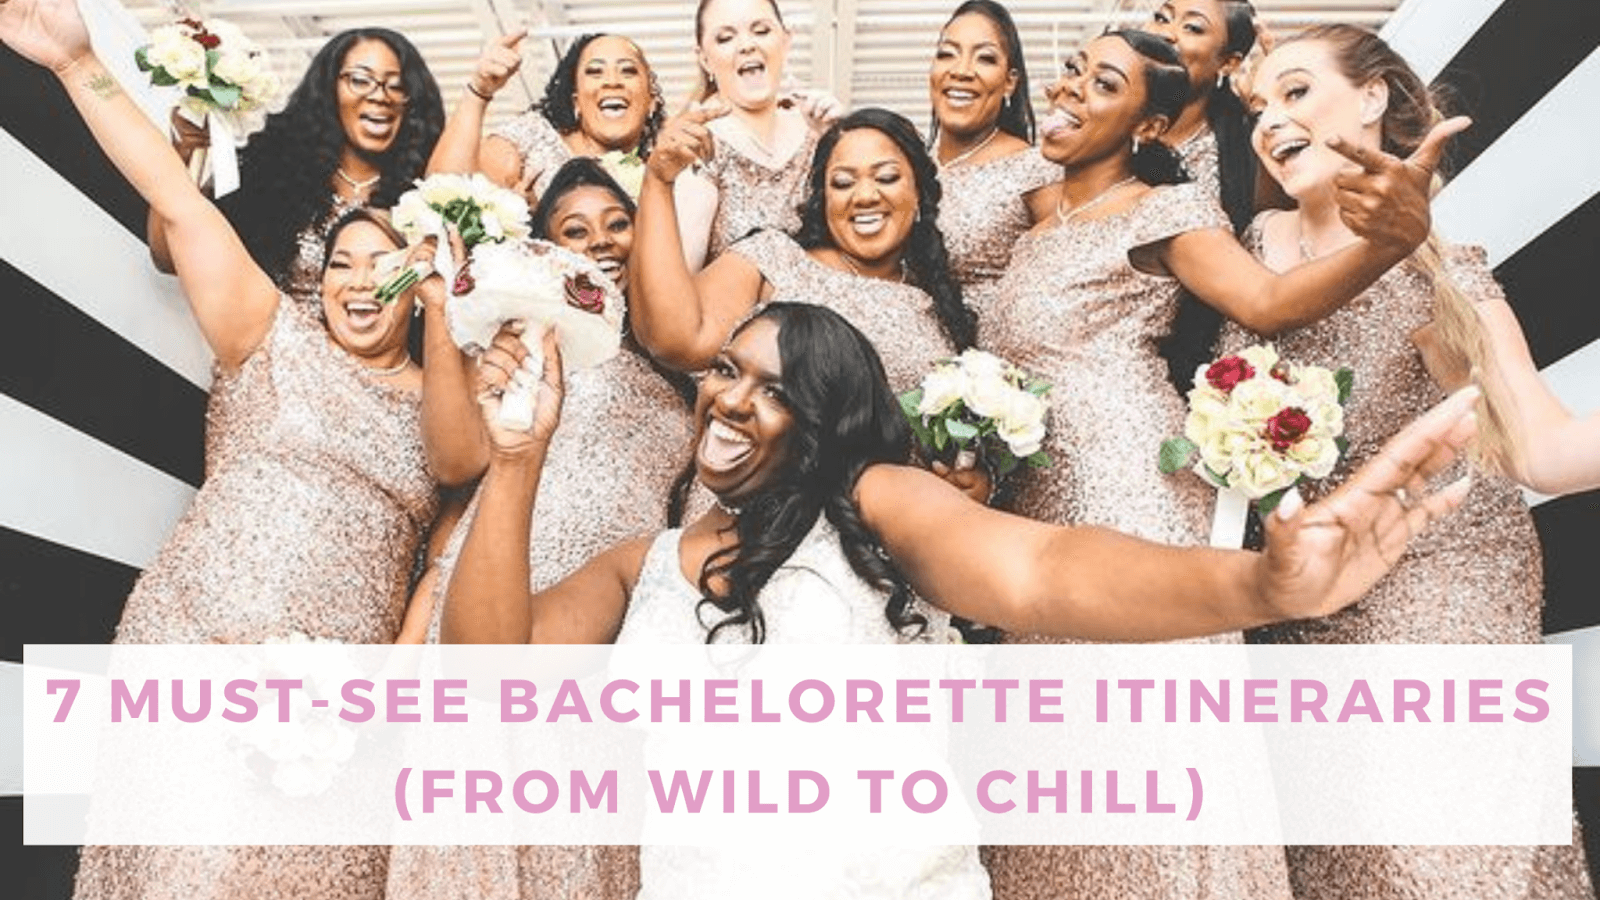 7 Bachelorette Itineraries [Wild–Chill]